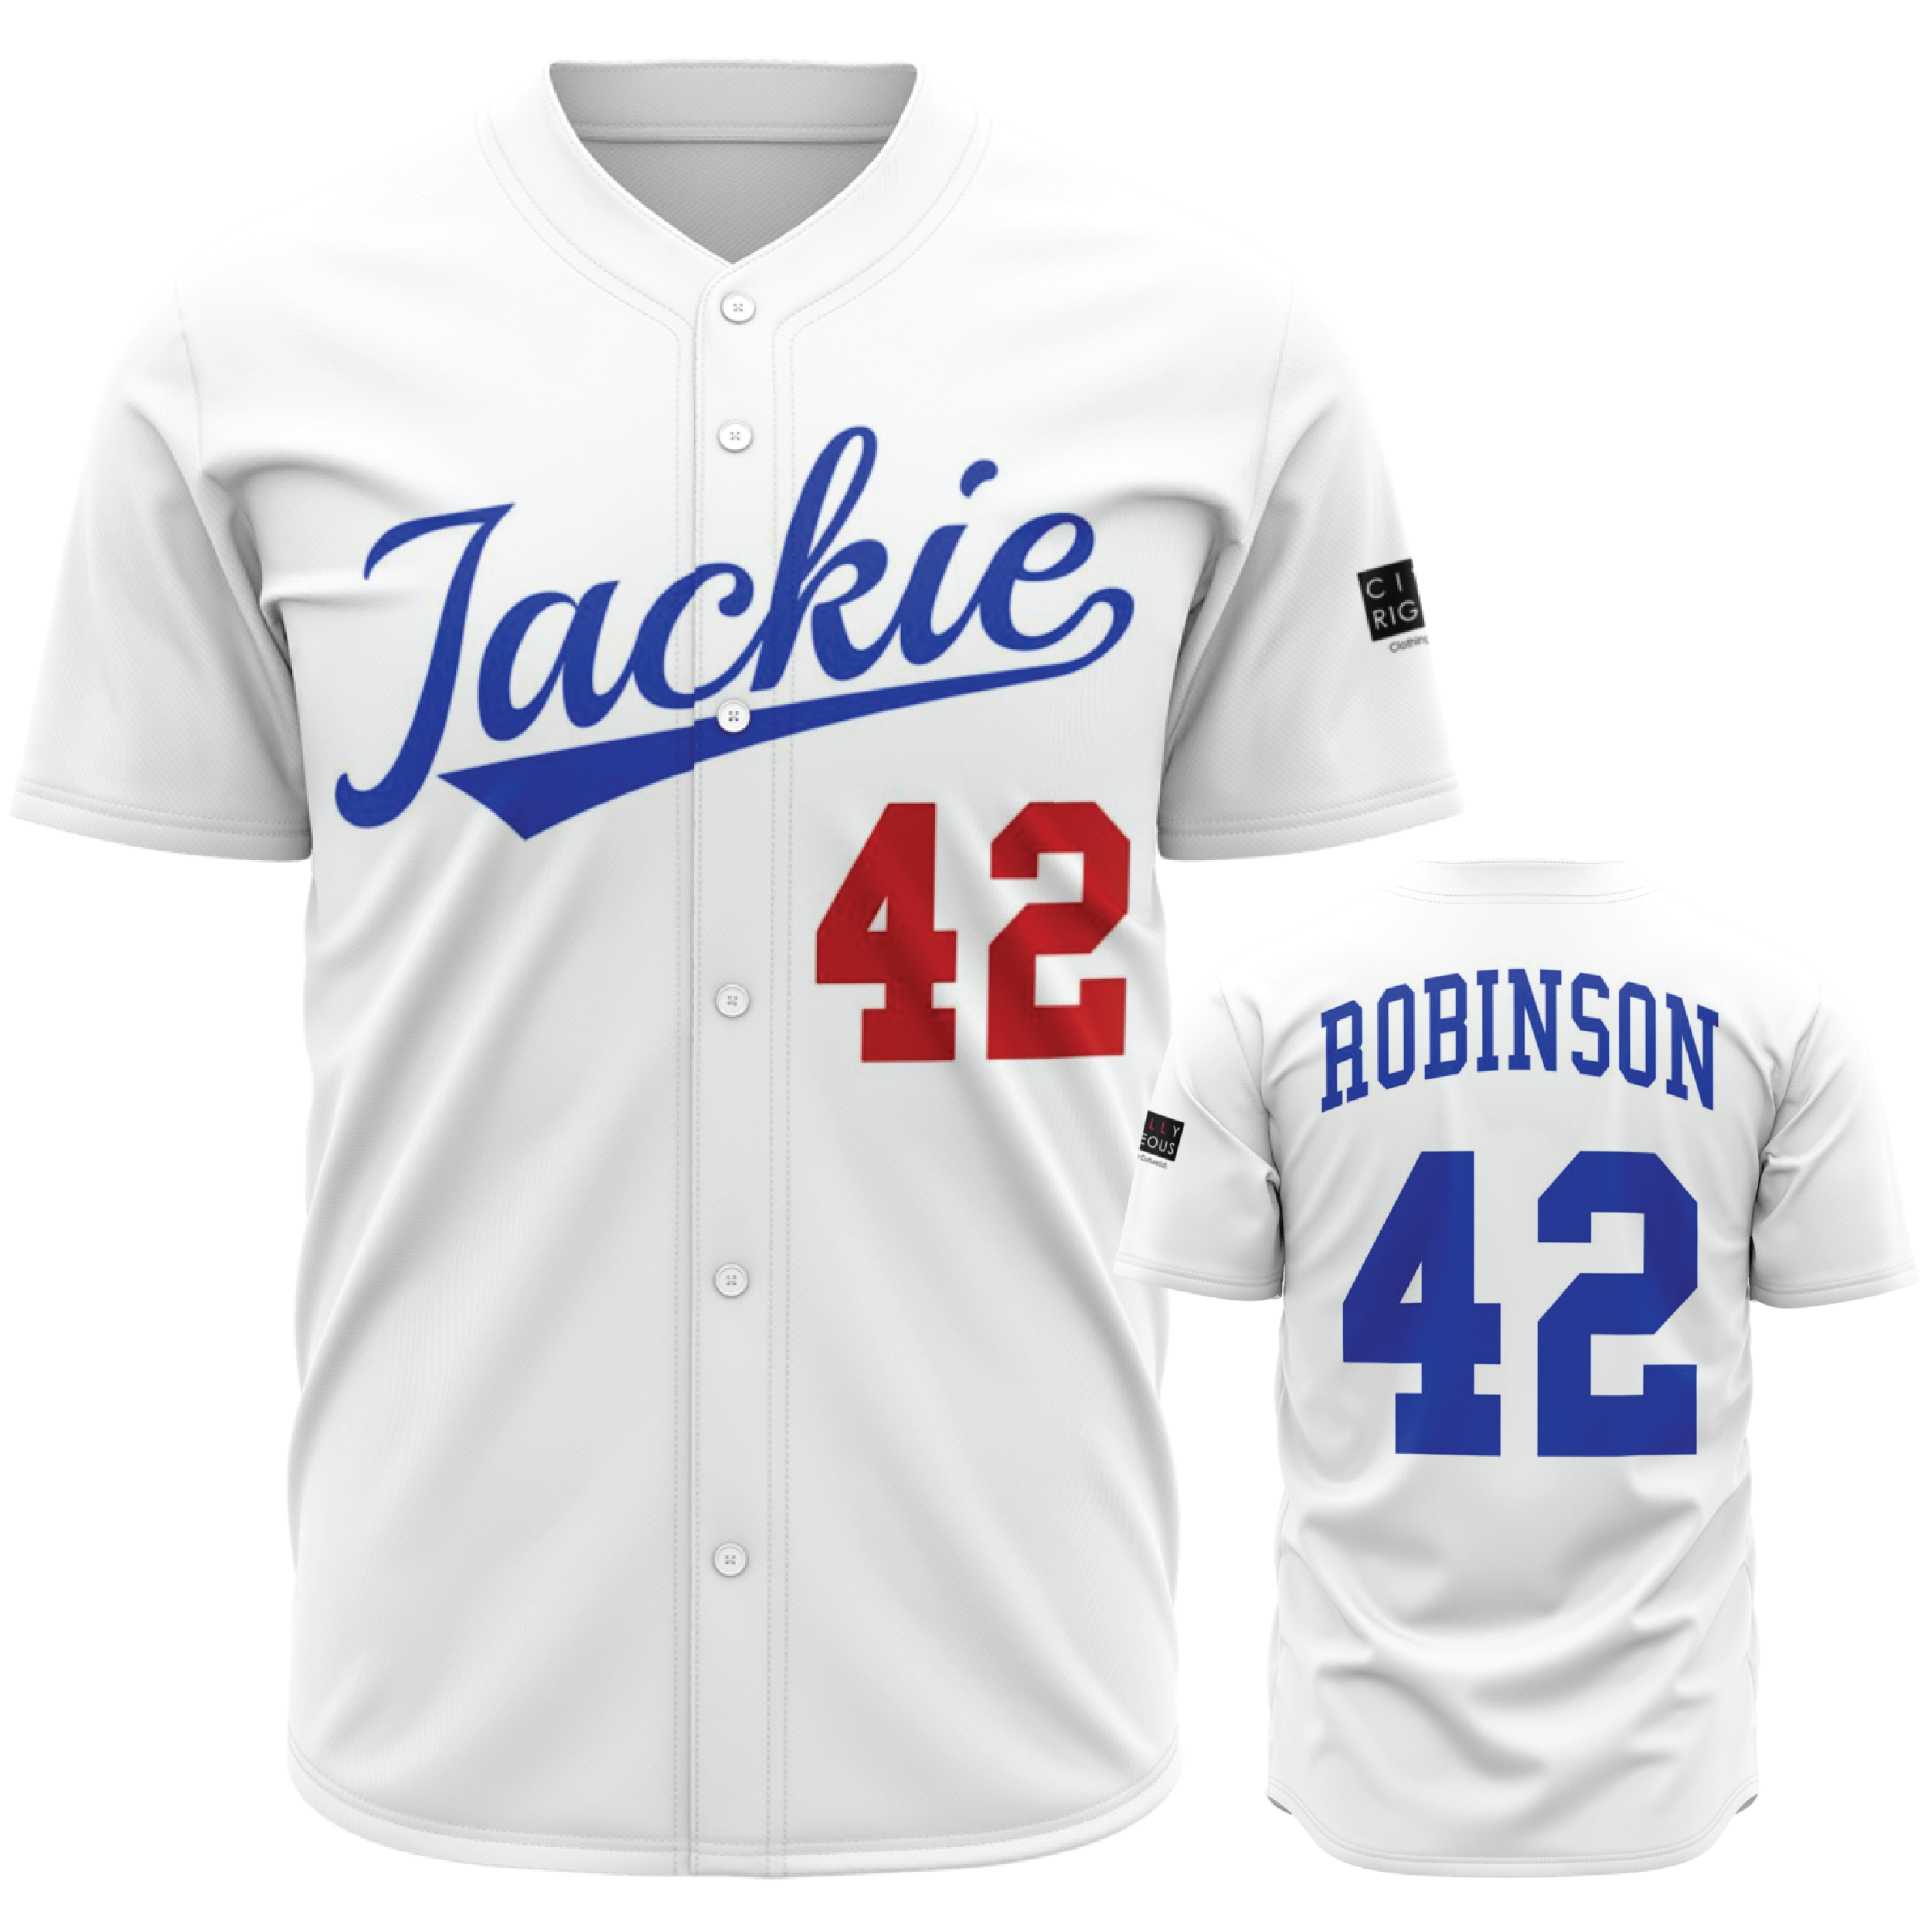 baseball jerseys jackie robinson